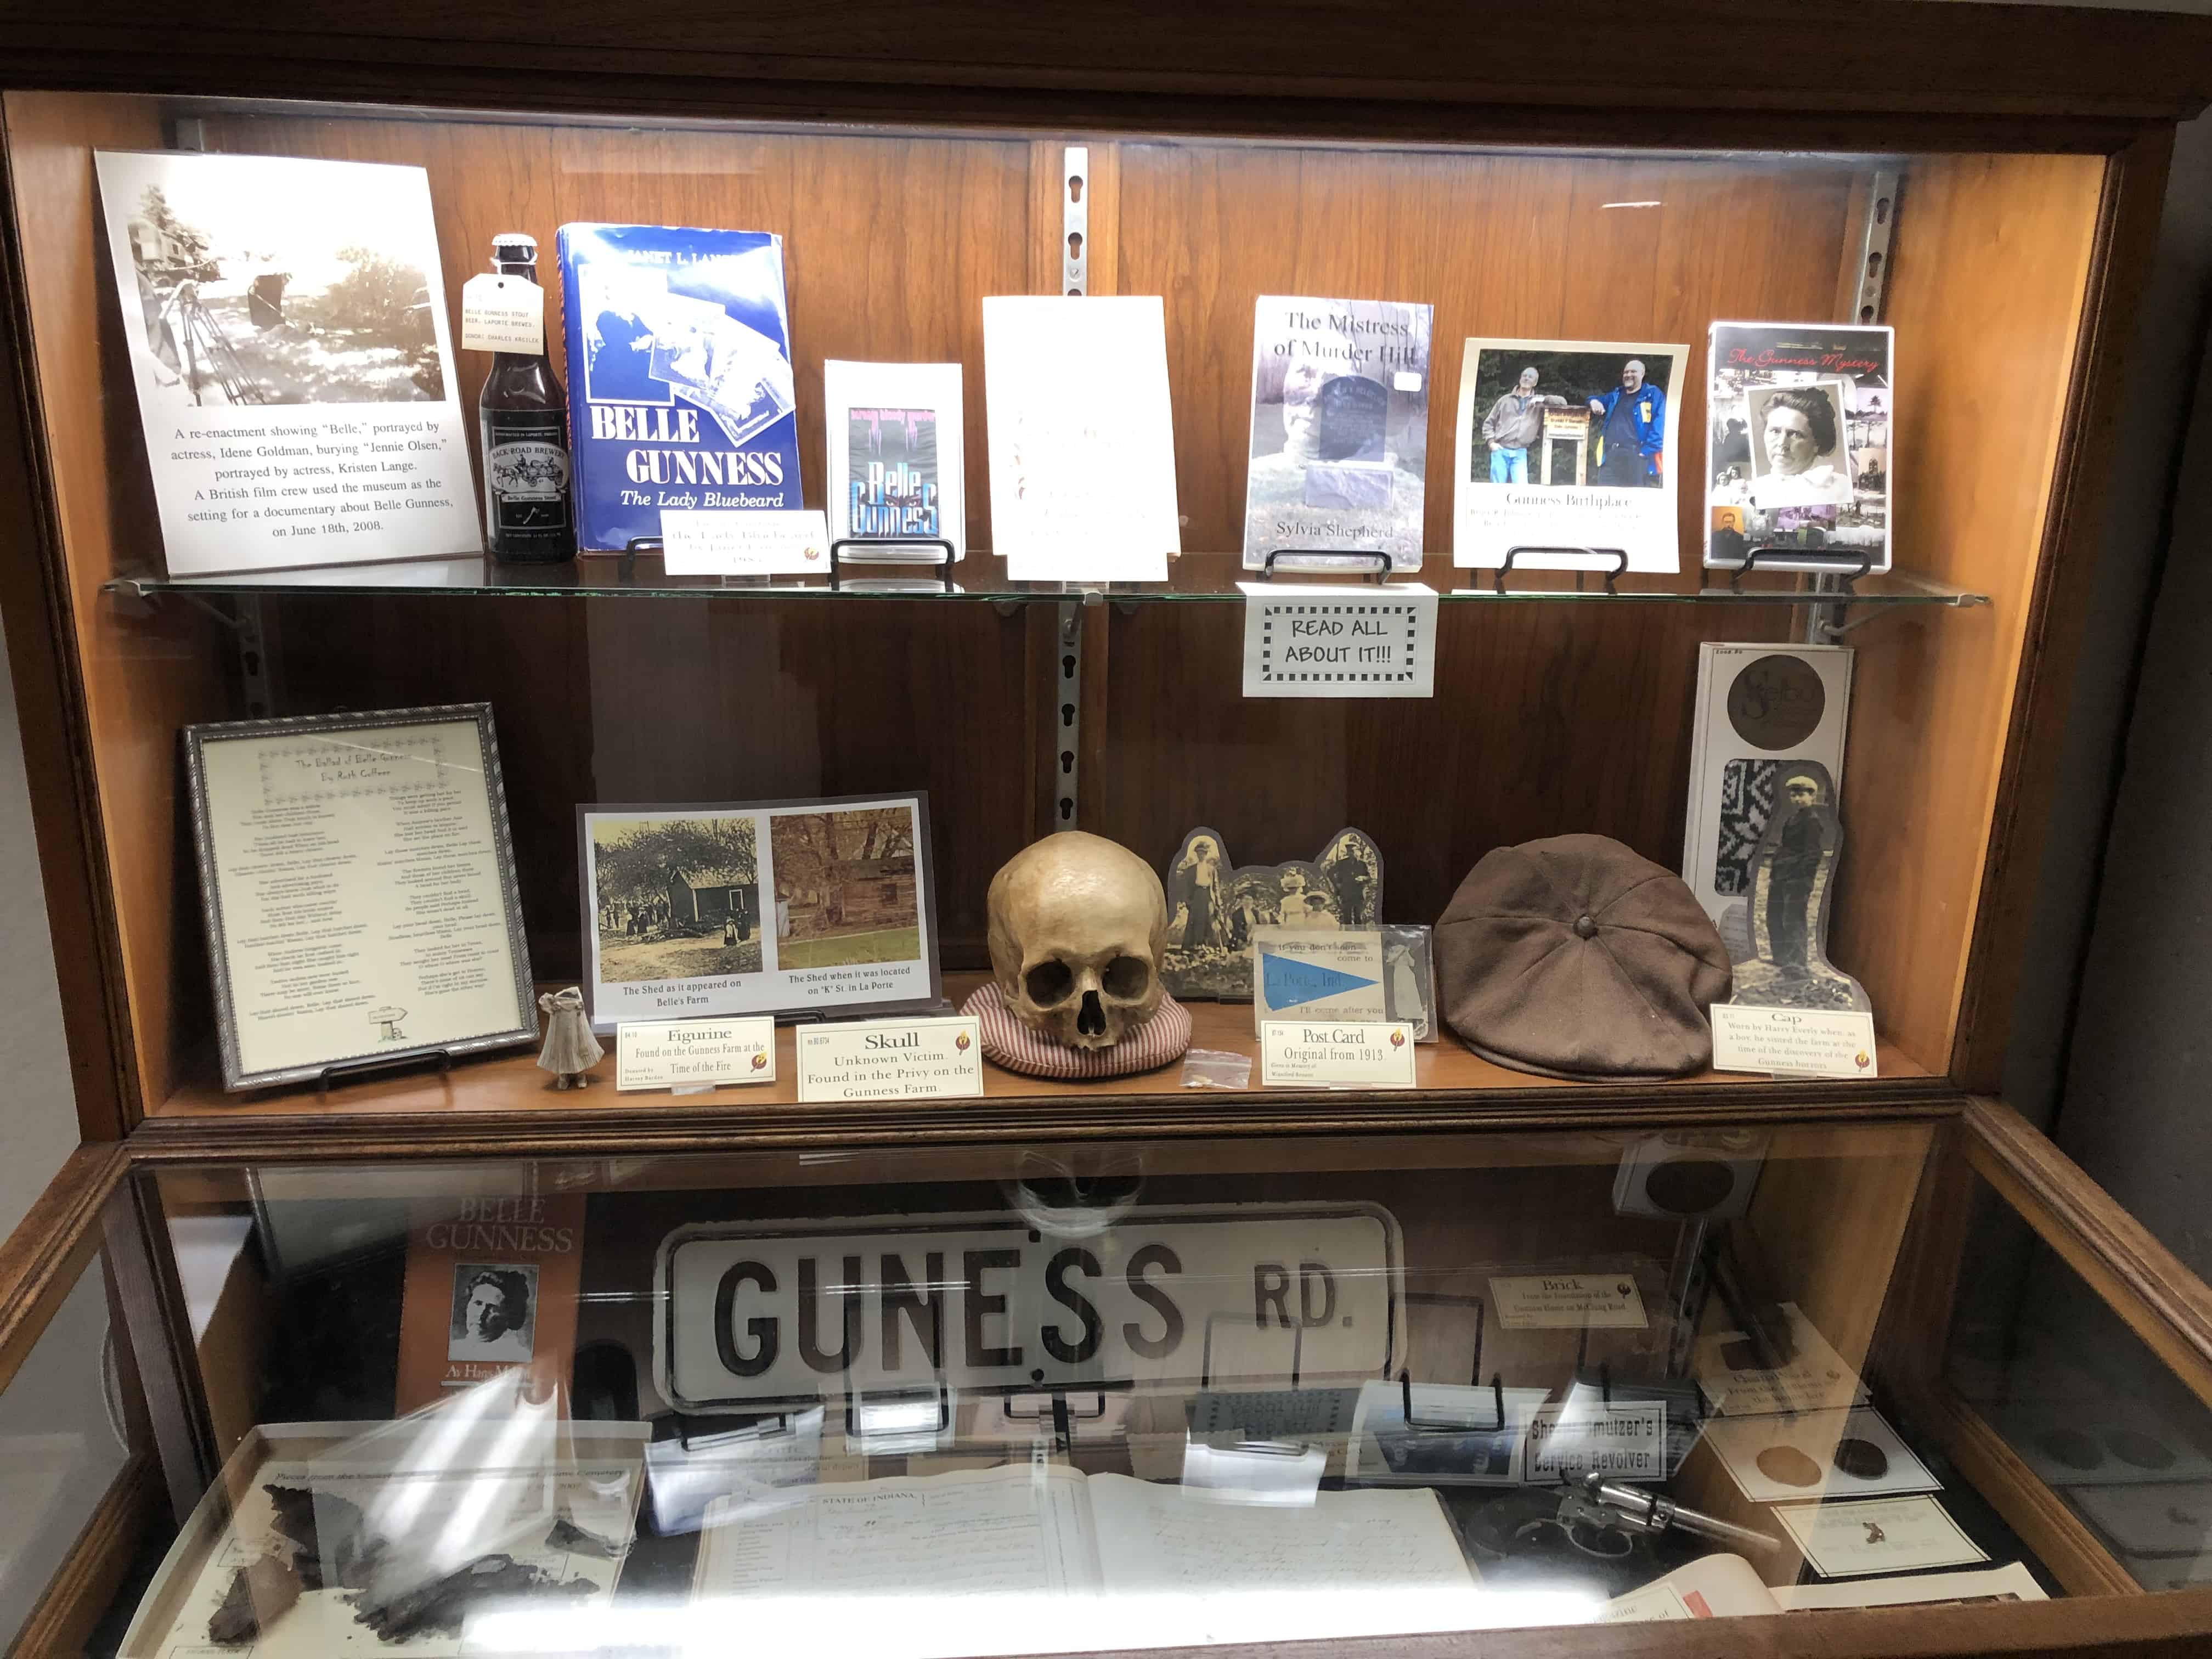 Belle Gunness Exhibit at the La Porte County Historical Society Museum in La Porte, Indiana